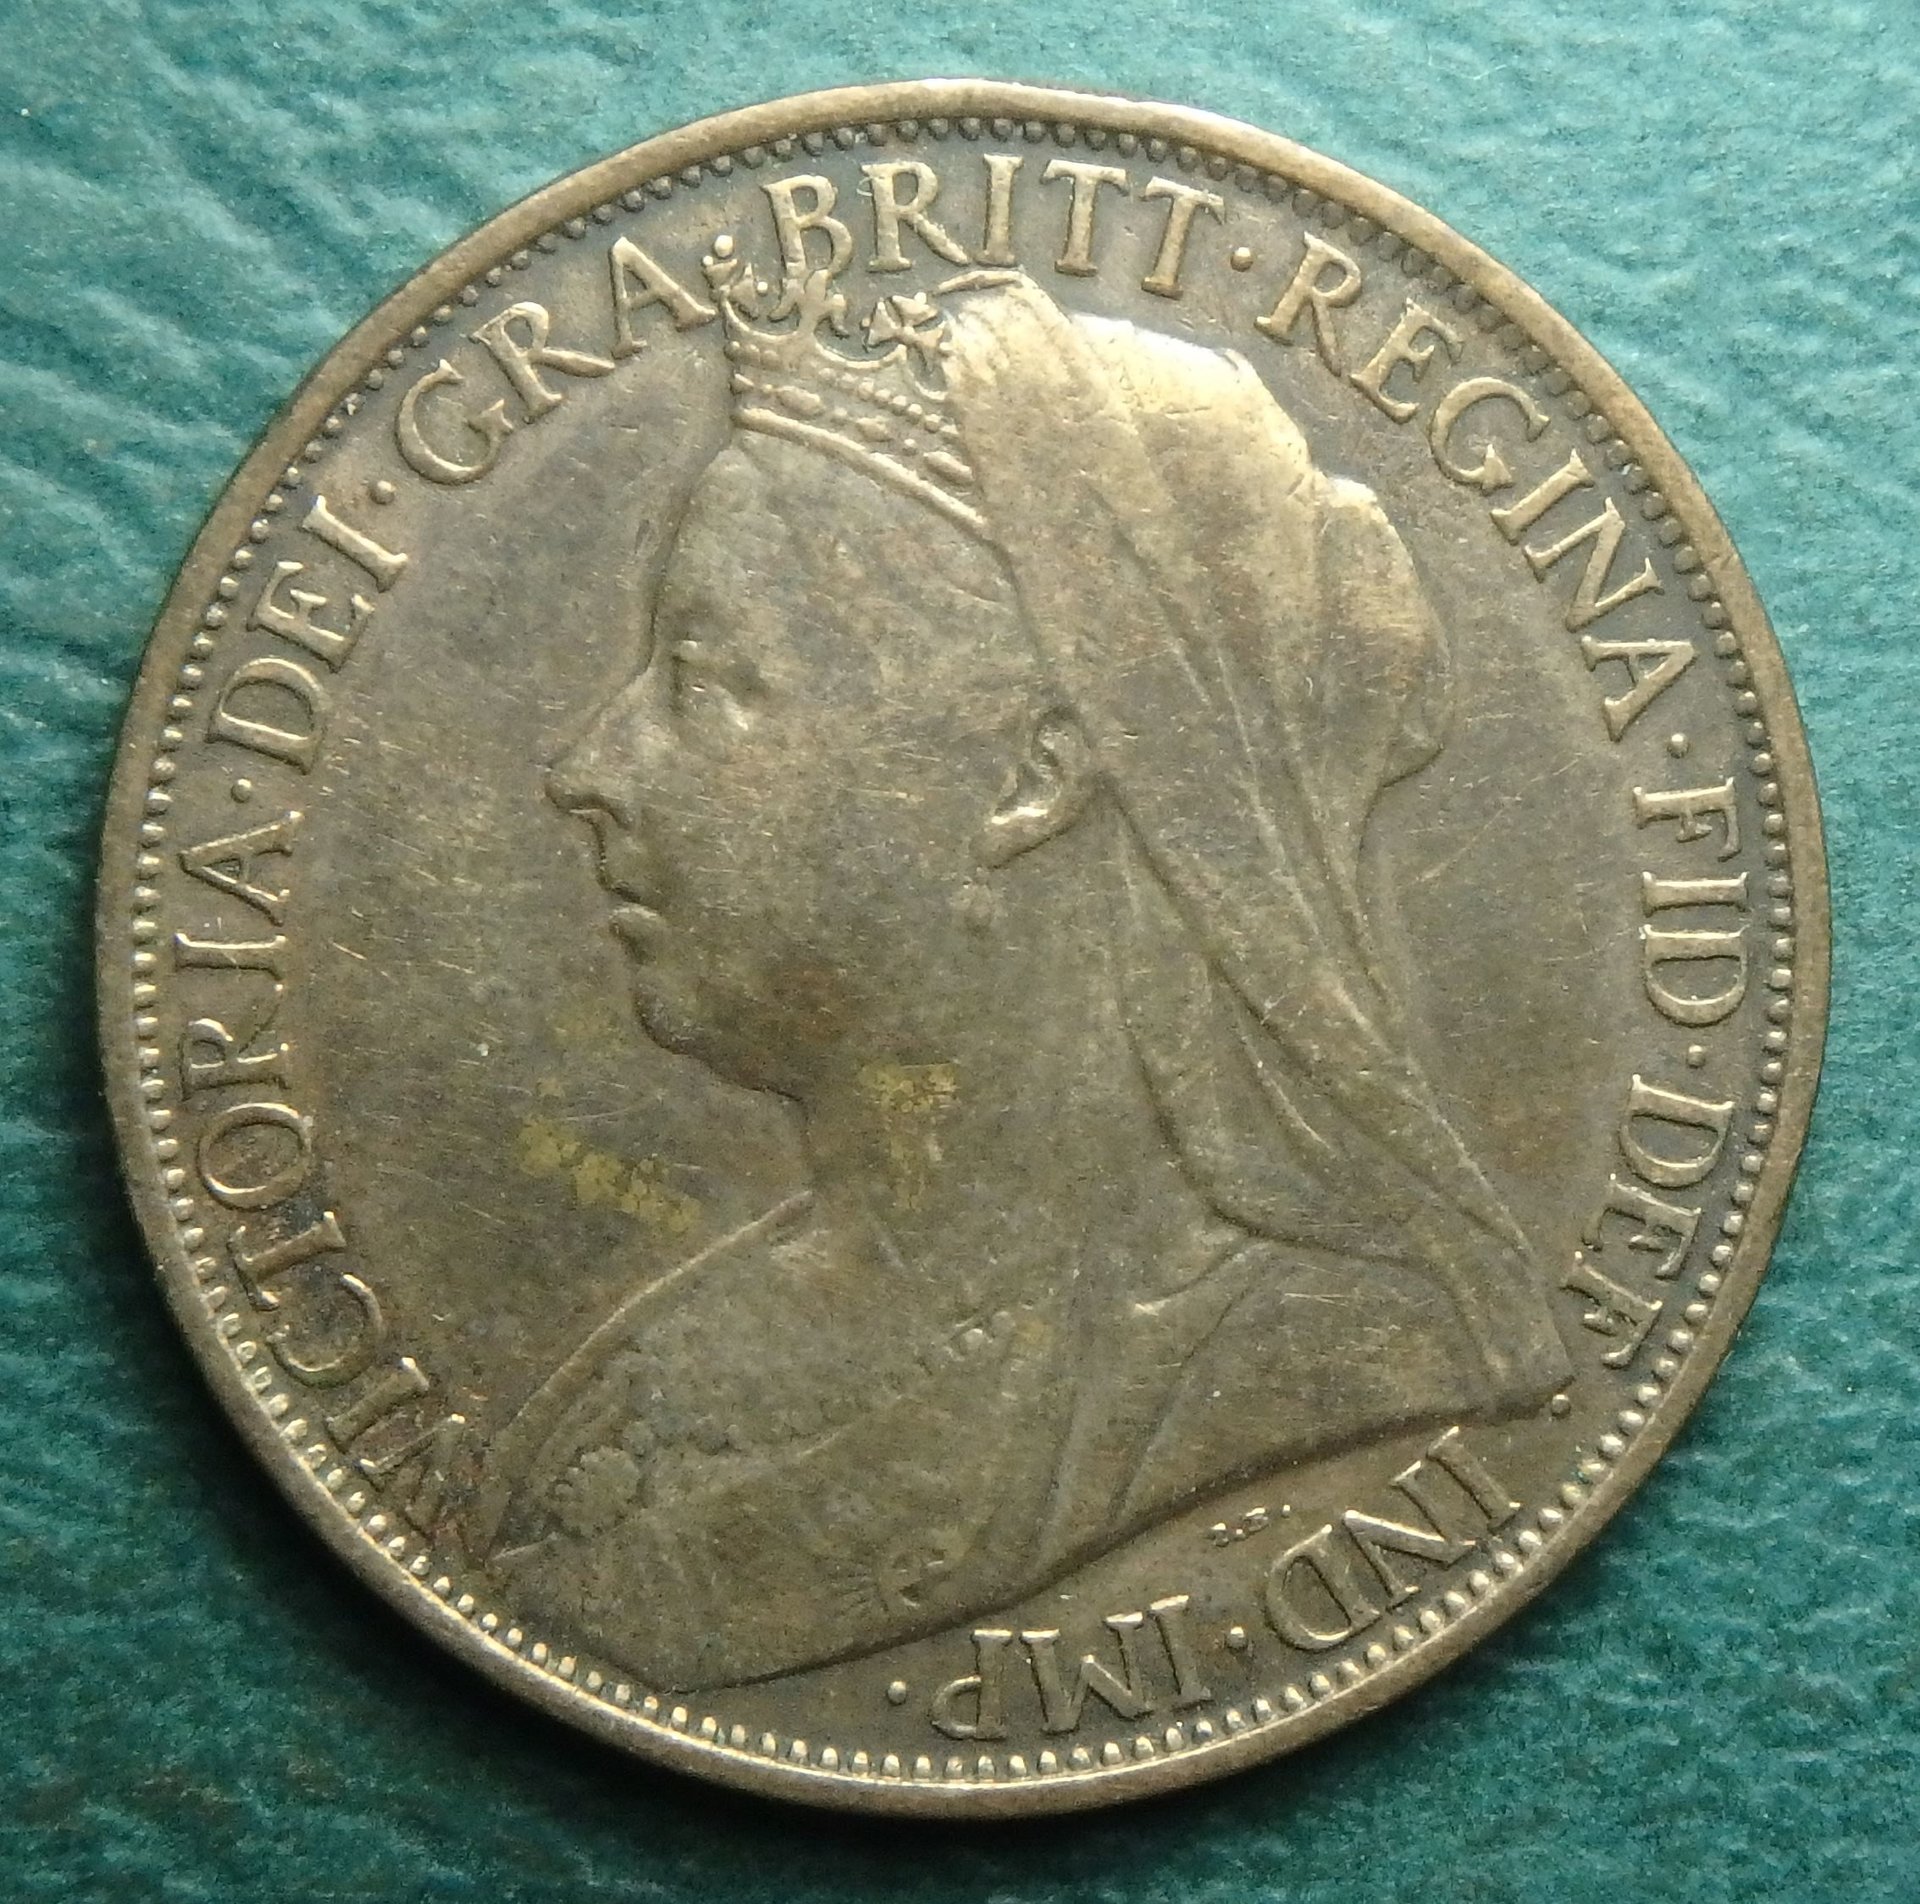 1899 GB 1 p obv.JPG